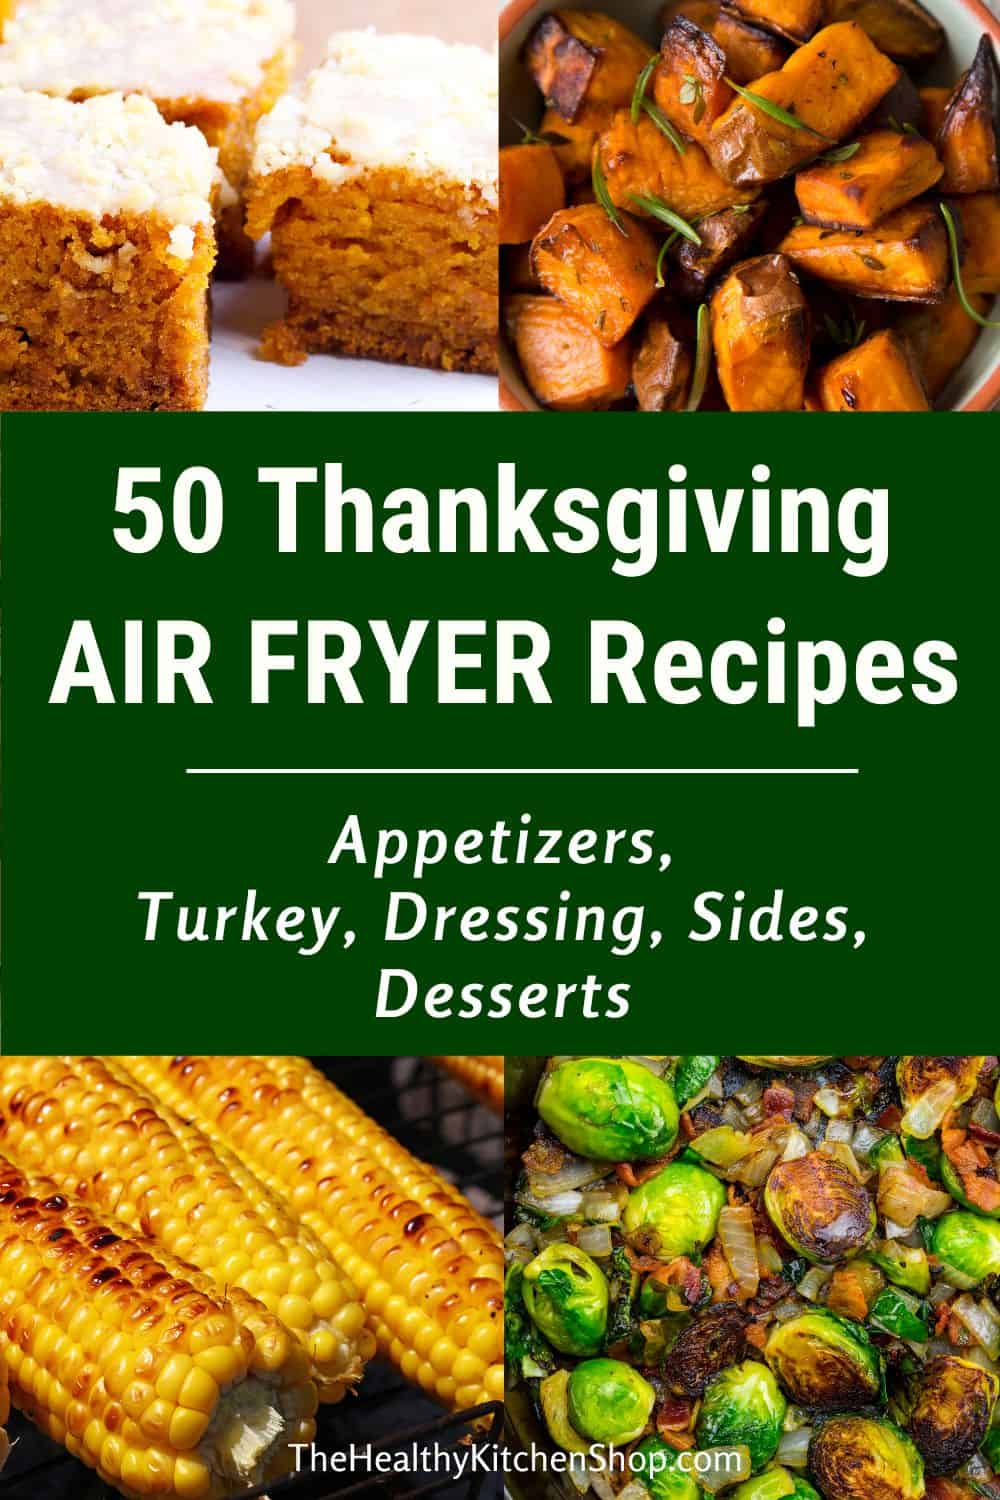 Thanksgiving Air Fryer Recipes